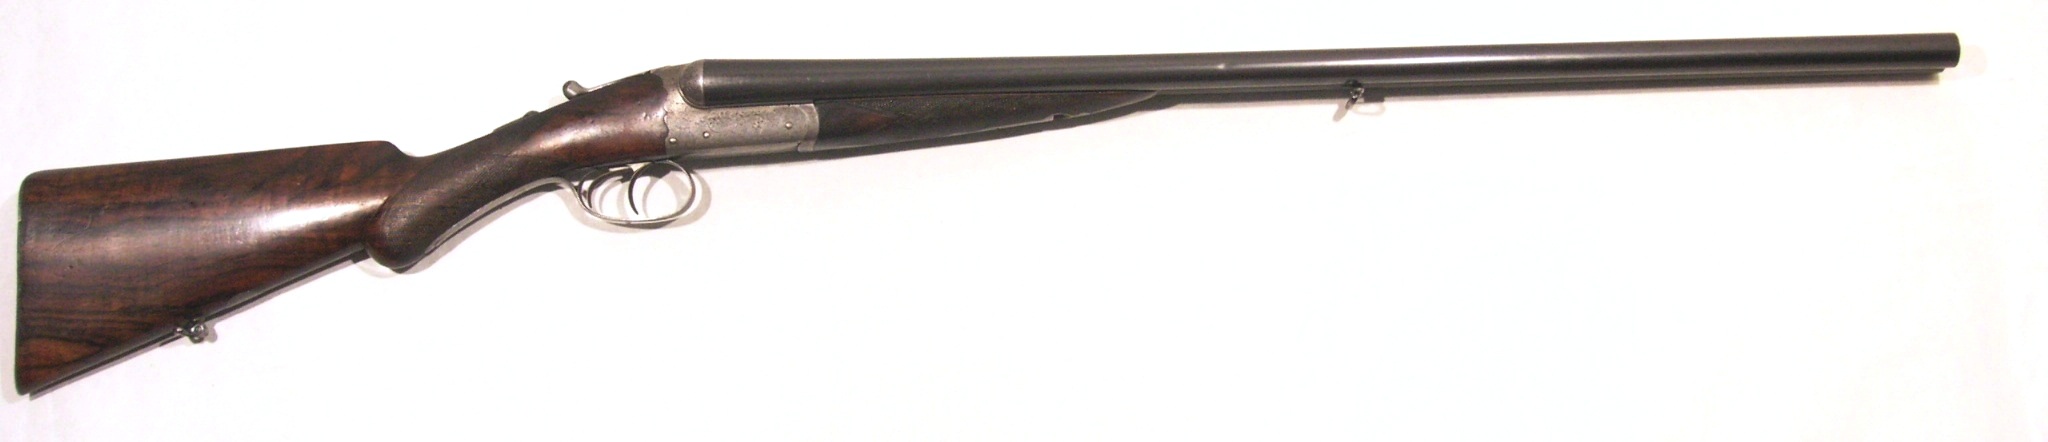 Escopeta WESTLEY RICHARDS, modelo BOX LOCK EJECTOR,calibre 12, nº 16359-0